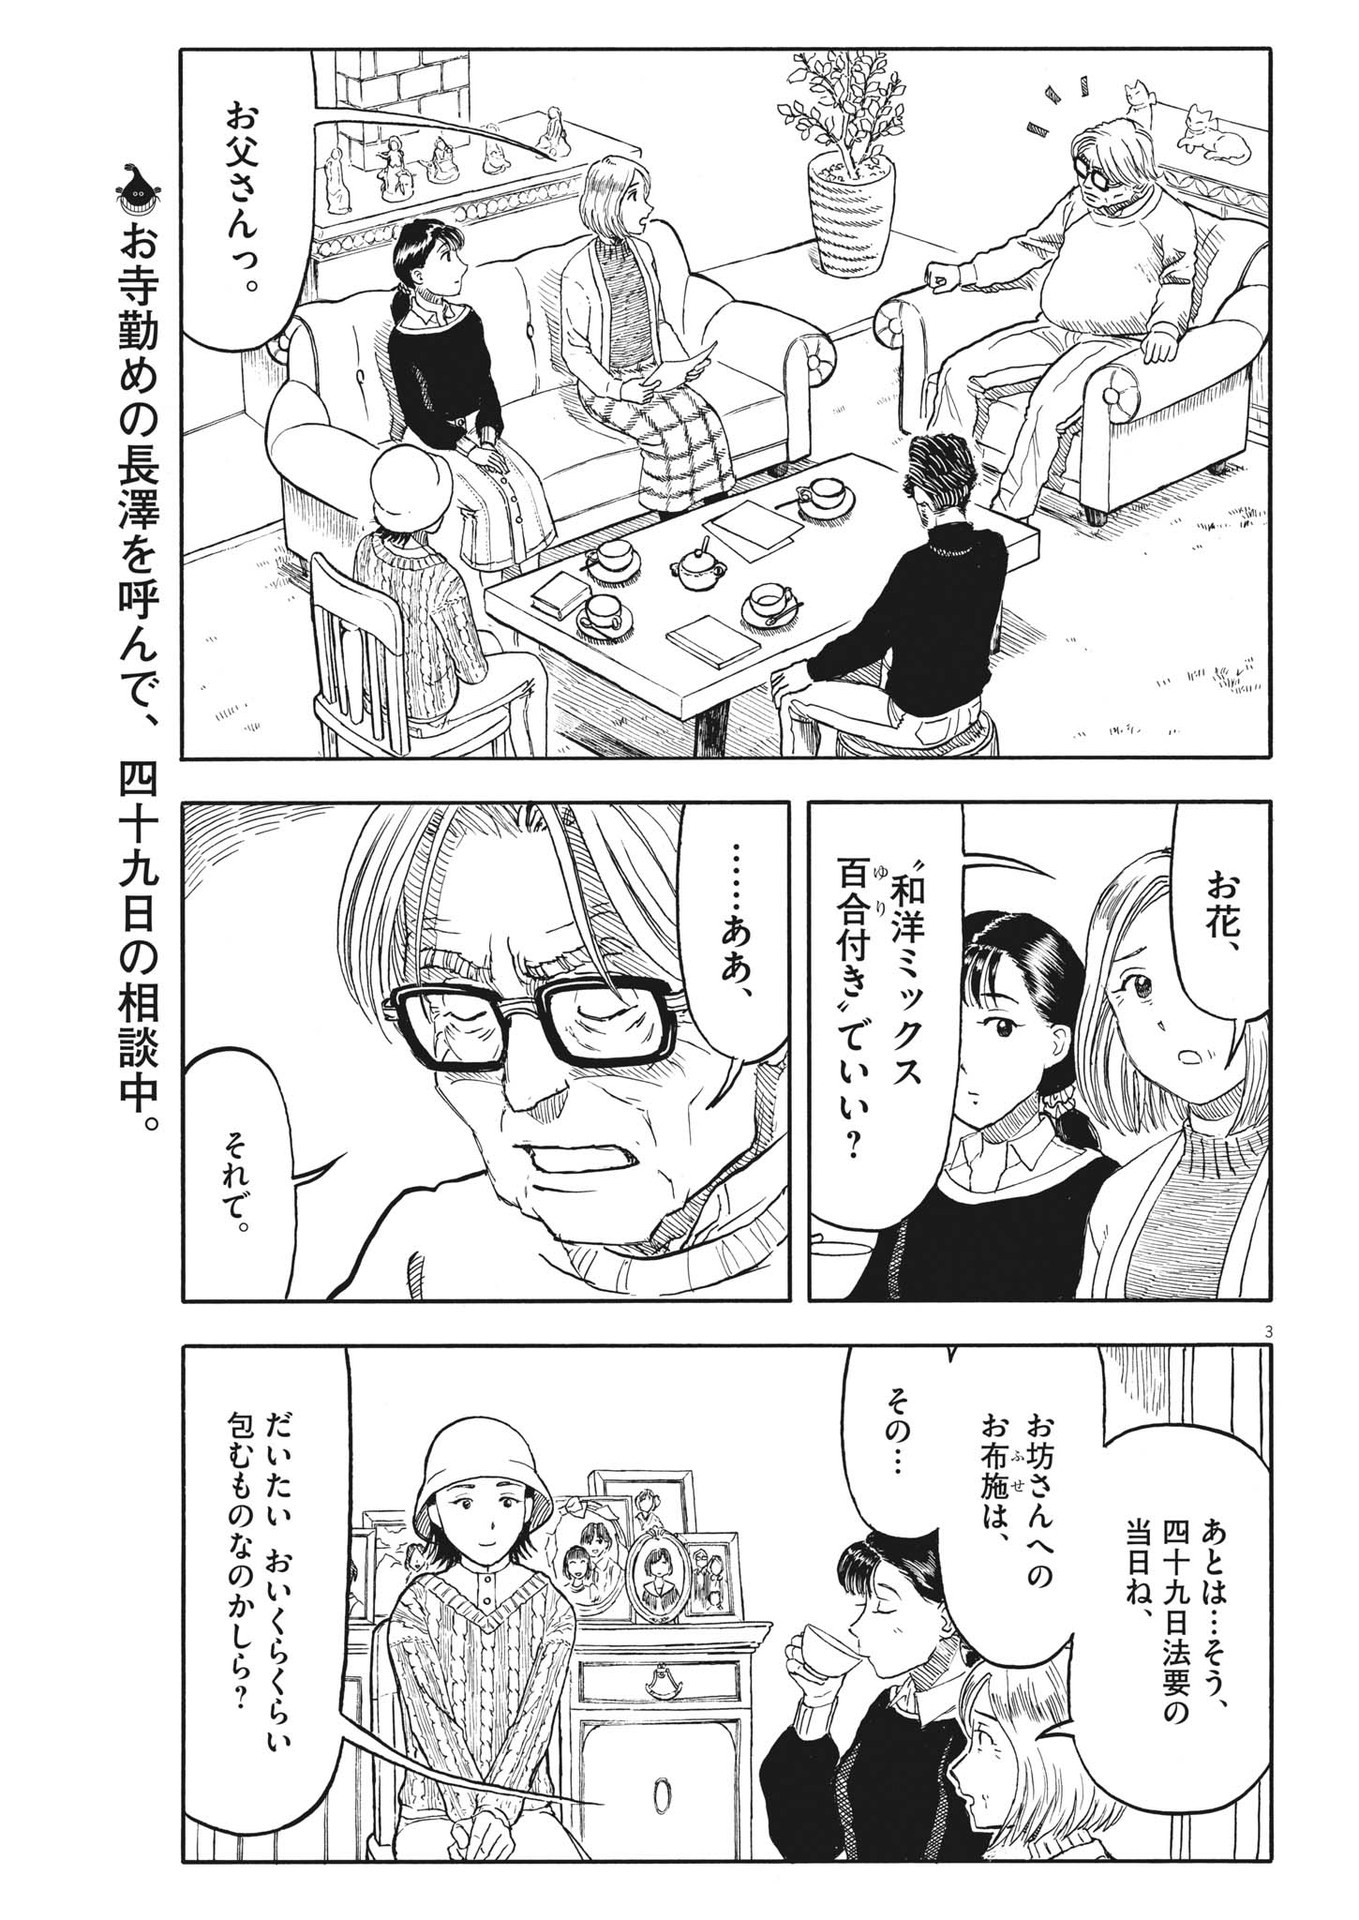 Komegura Fuufu no Recipe-chou - Chapter 28 - Page 3